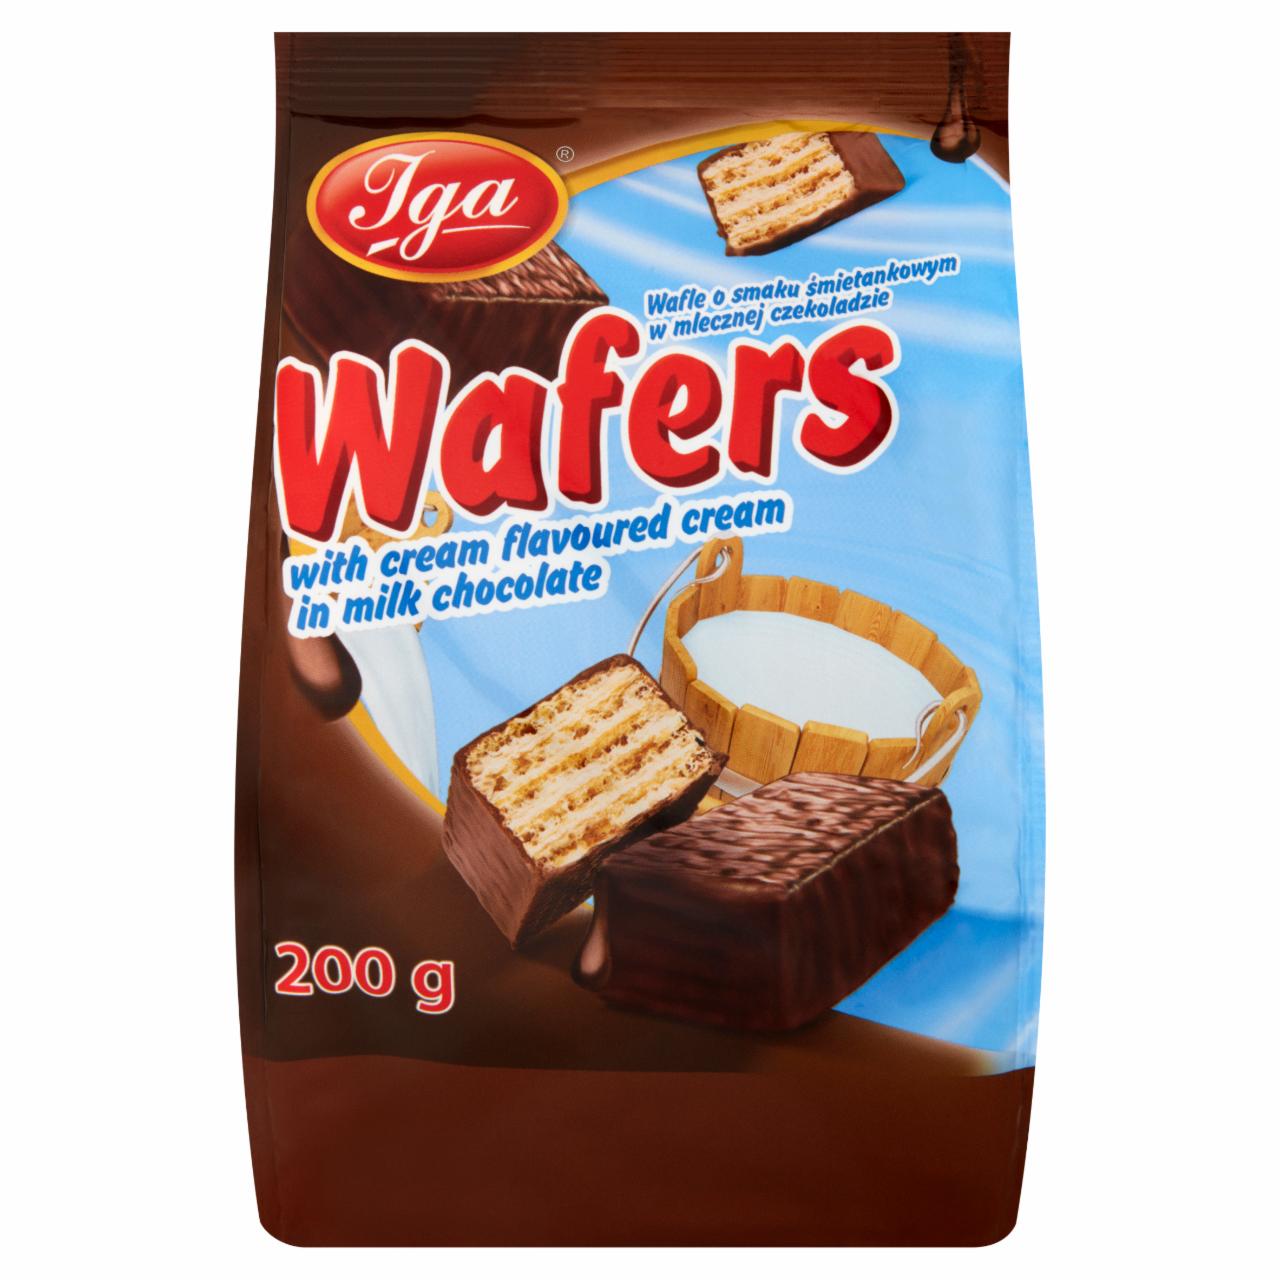 Photo - Iga Wafers Cream Flavoured Wafers in Milk Chocolate 200 g